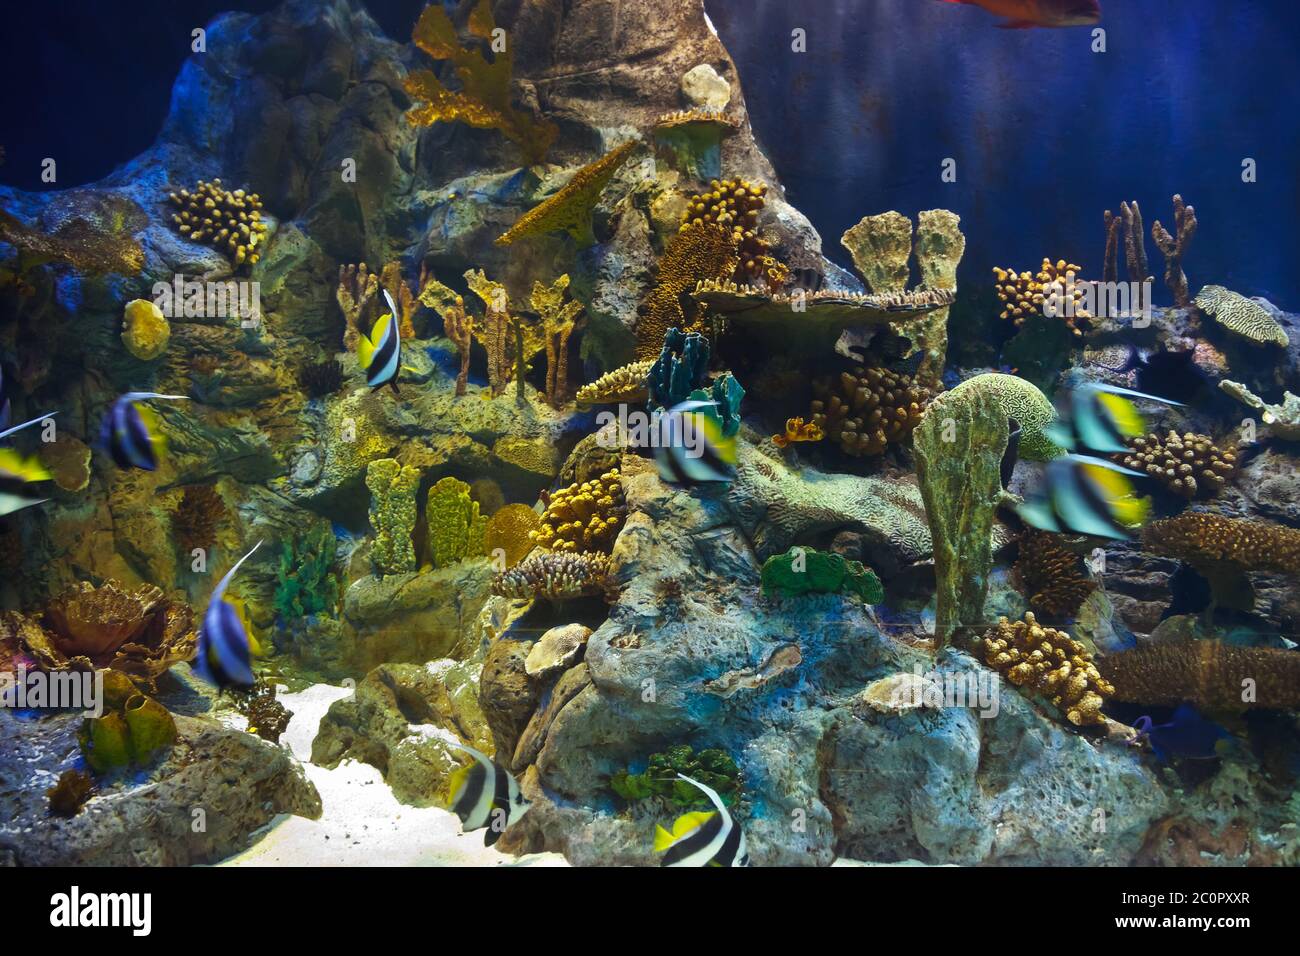 Fishes and corals reef in Aquarium Stock Photo